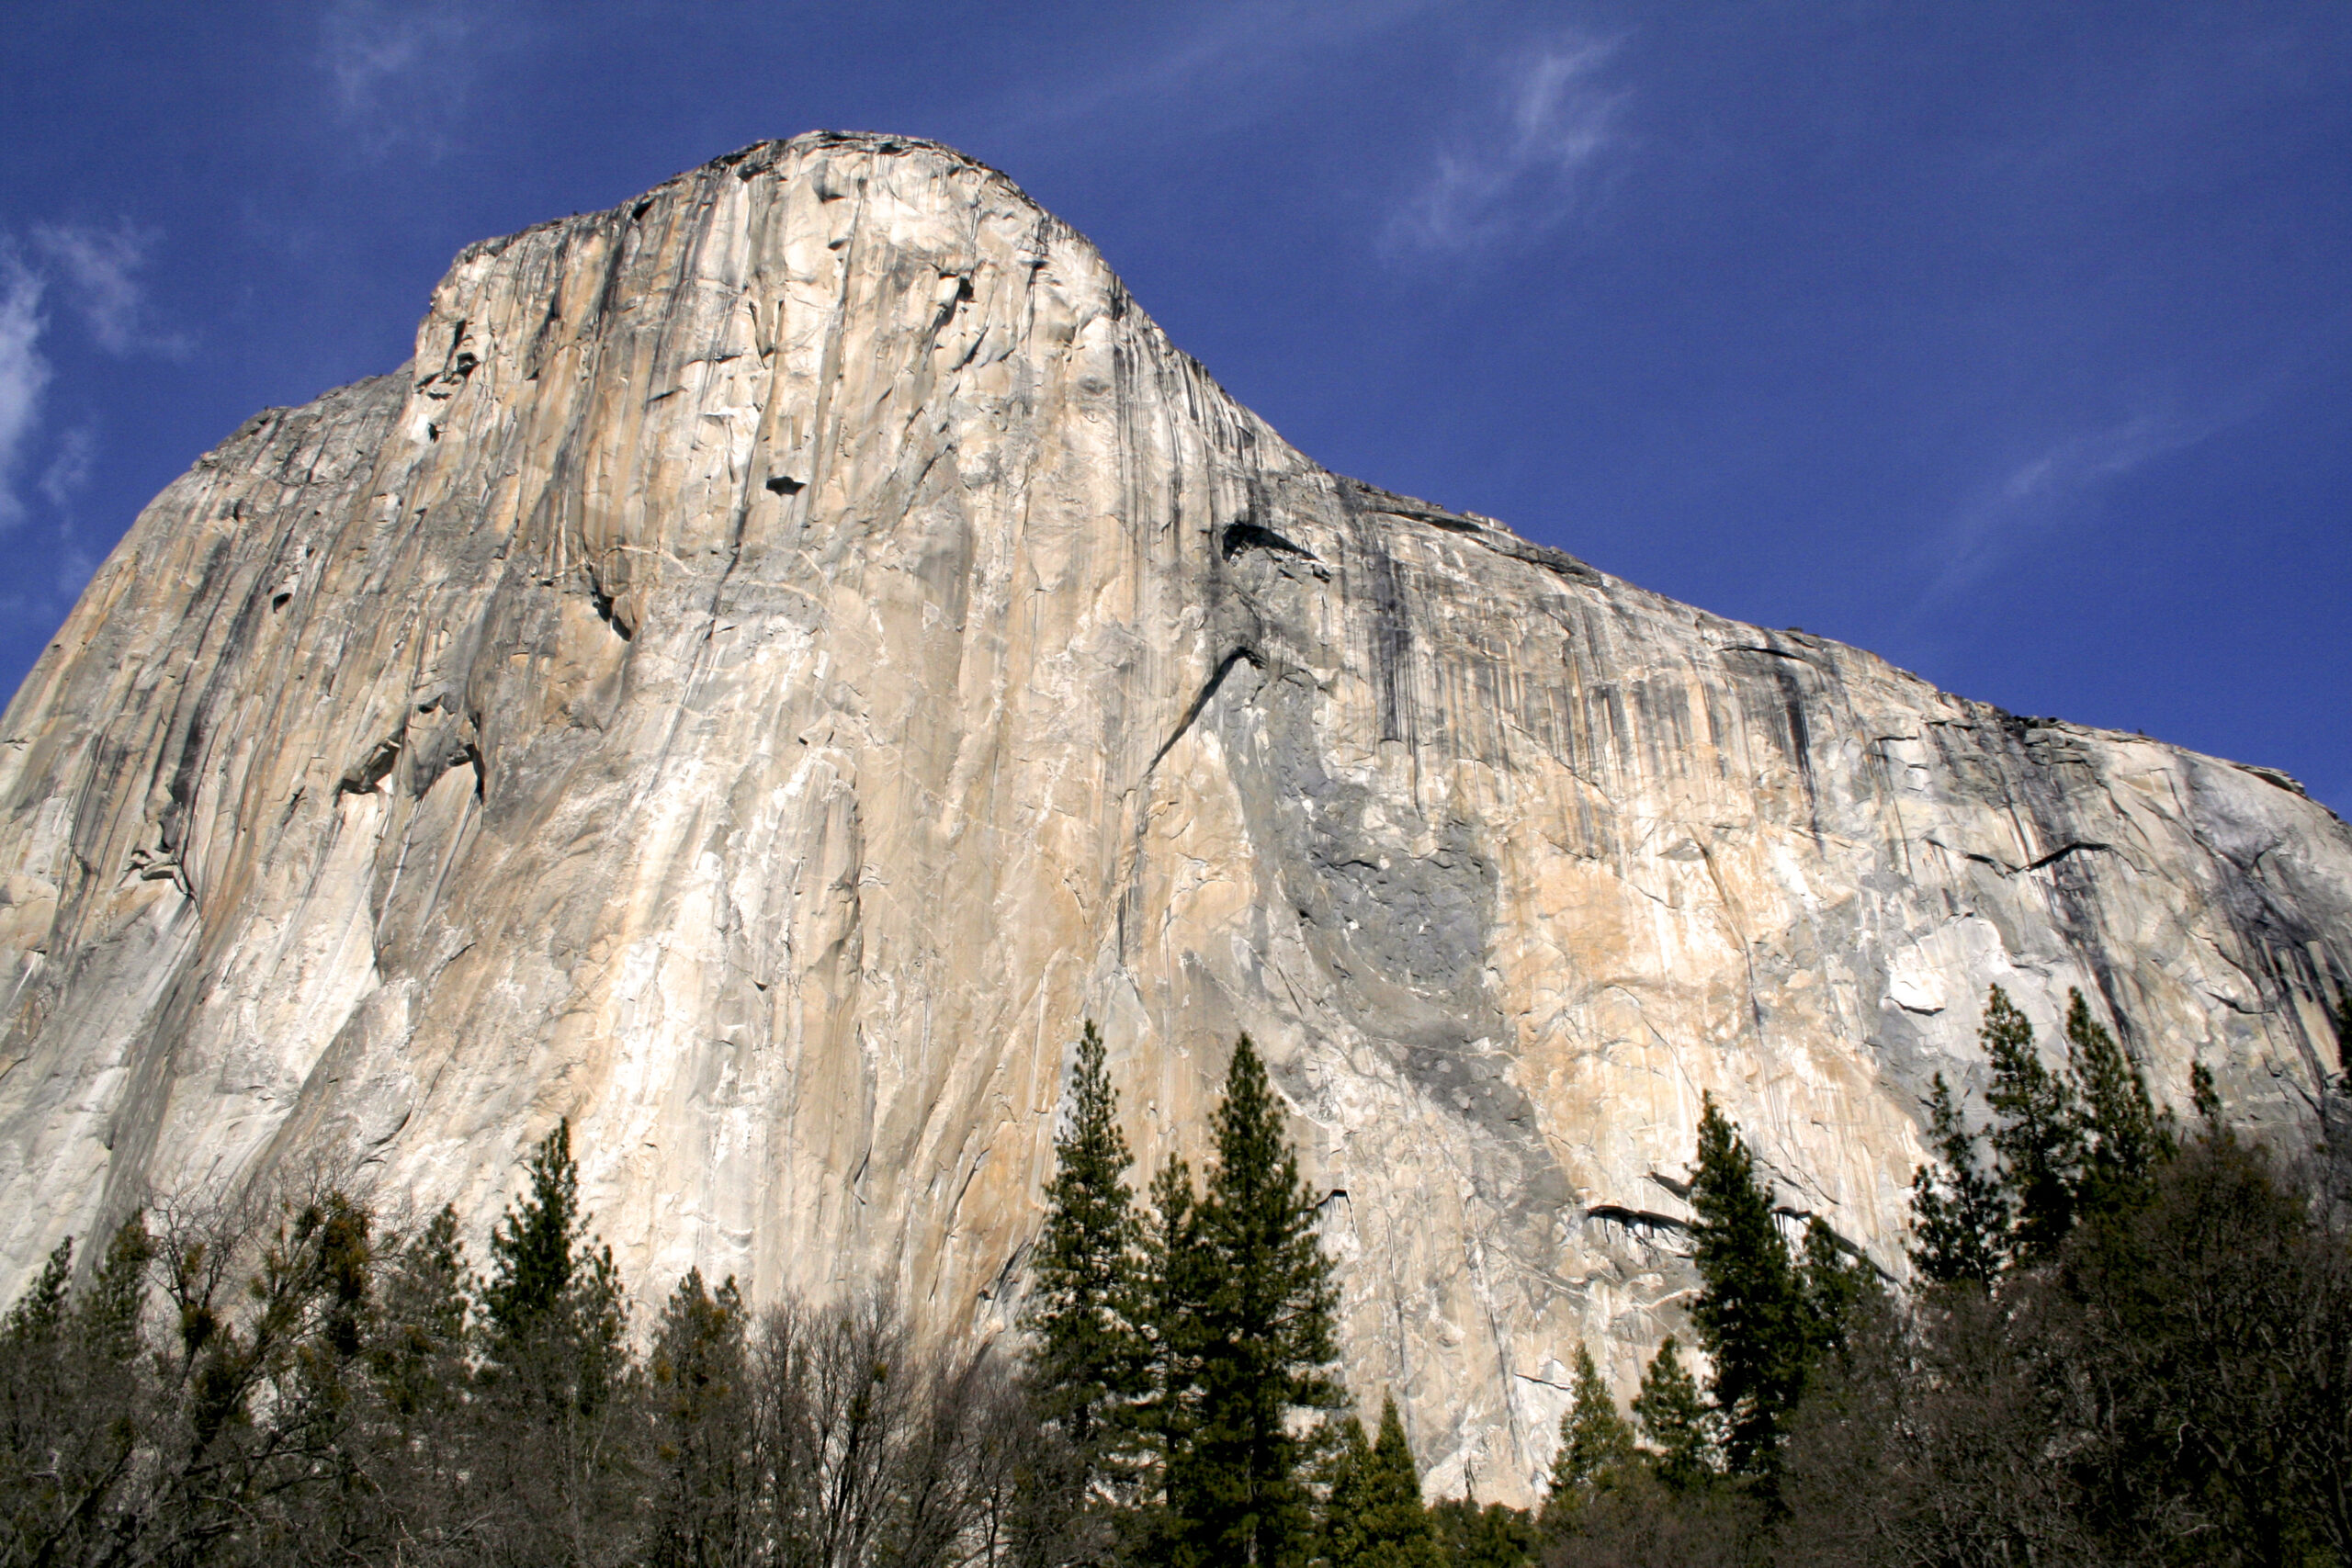 The majestic El Capitan at Yosemite National Park in California. (Photo: Super G)